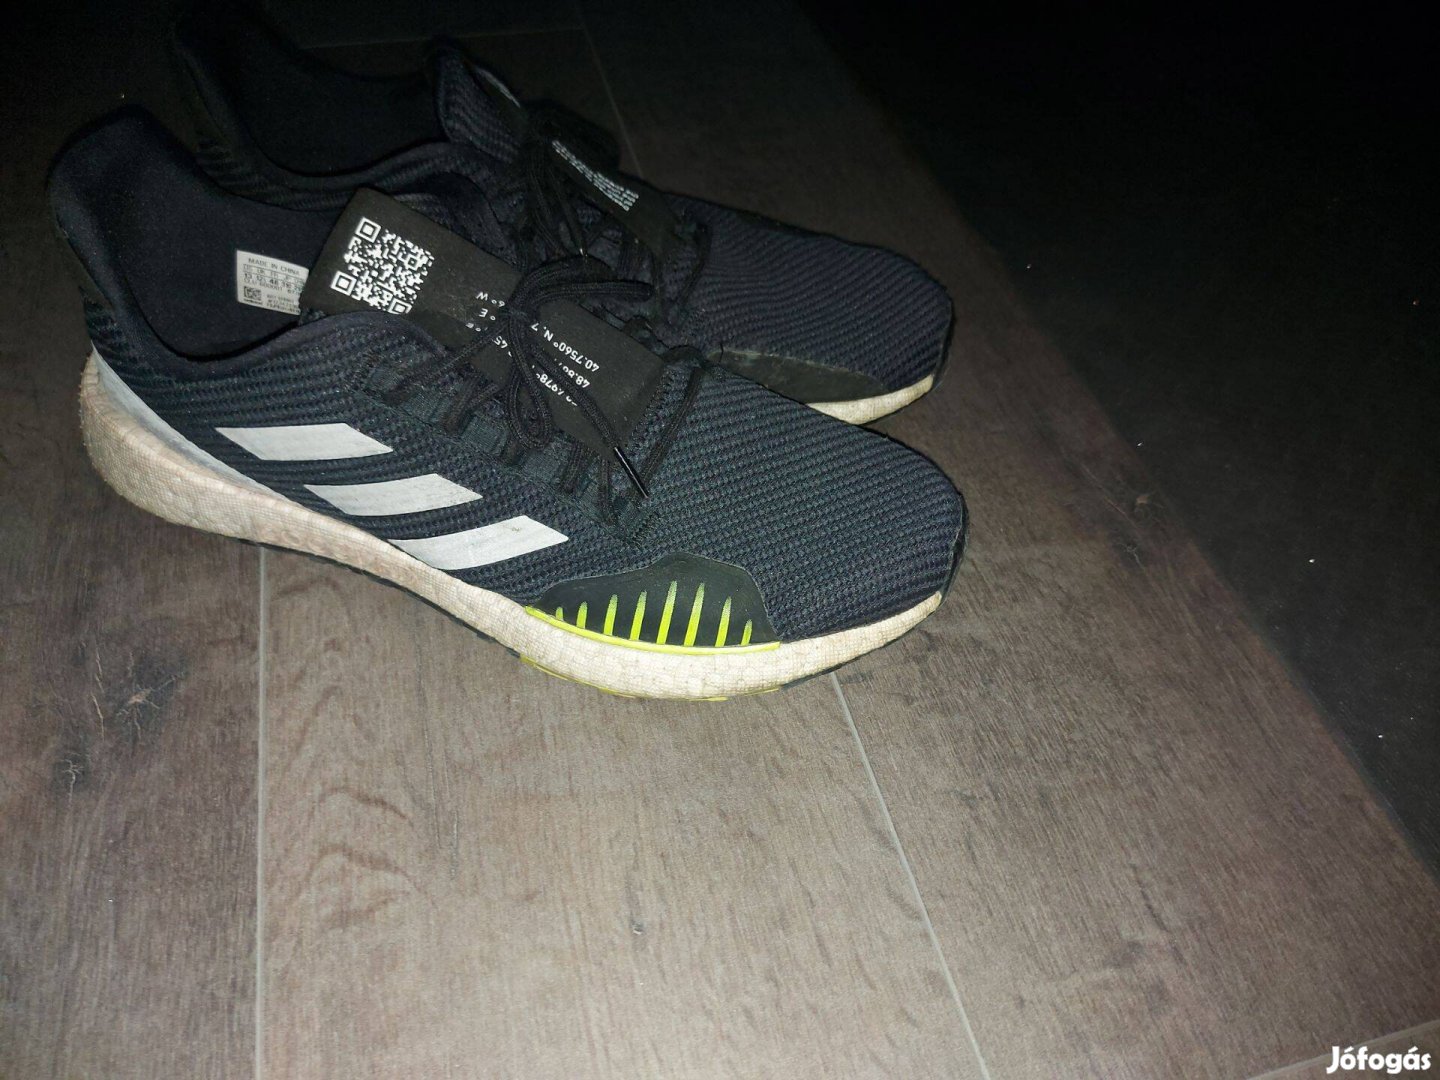 Adidas boost hd 48 48-as futó cipő